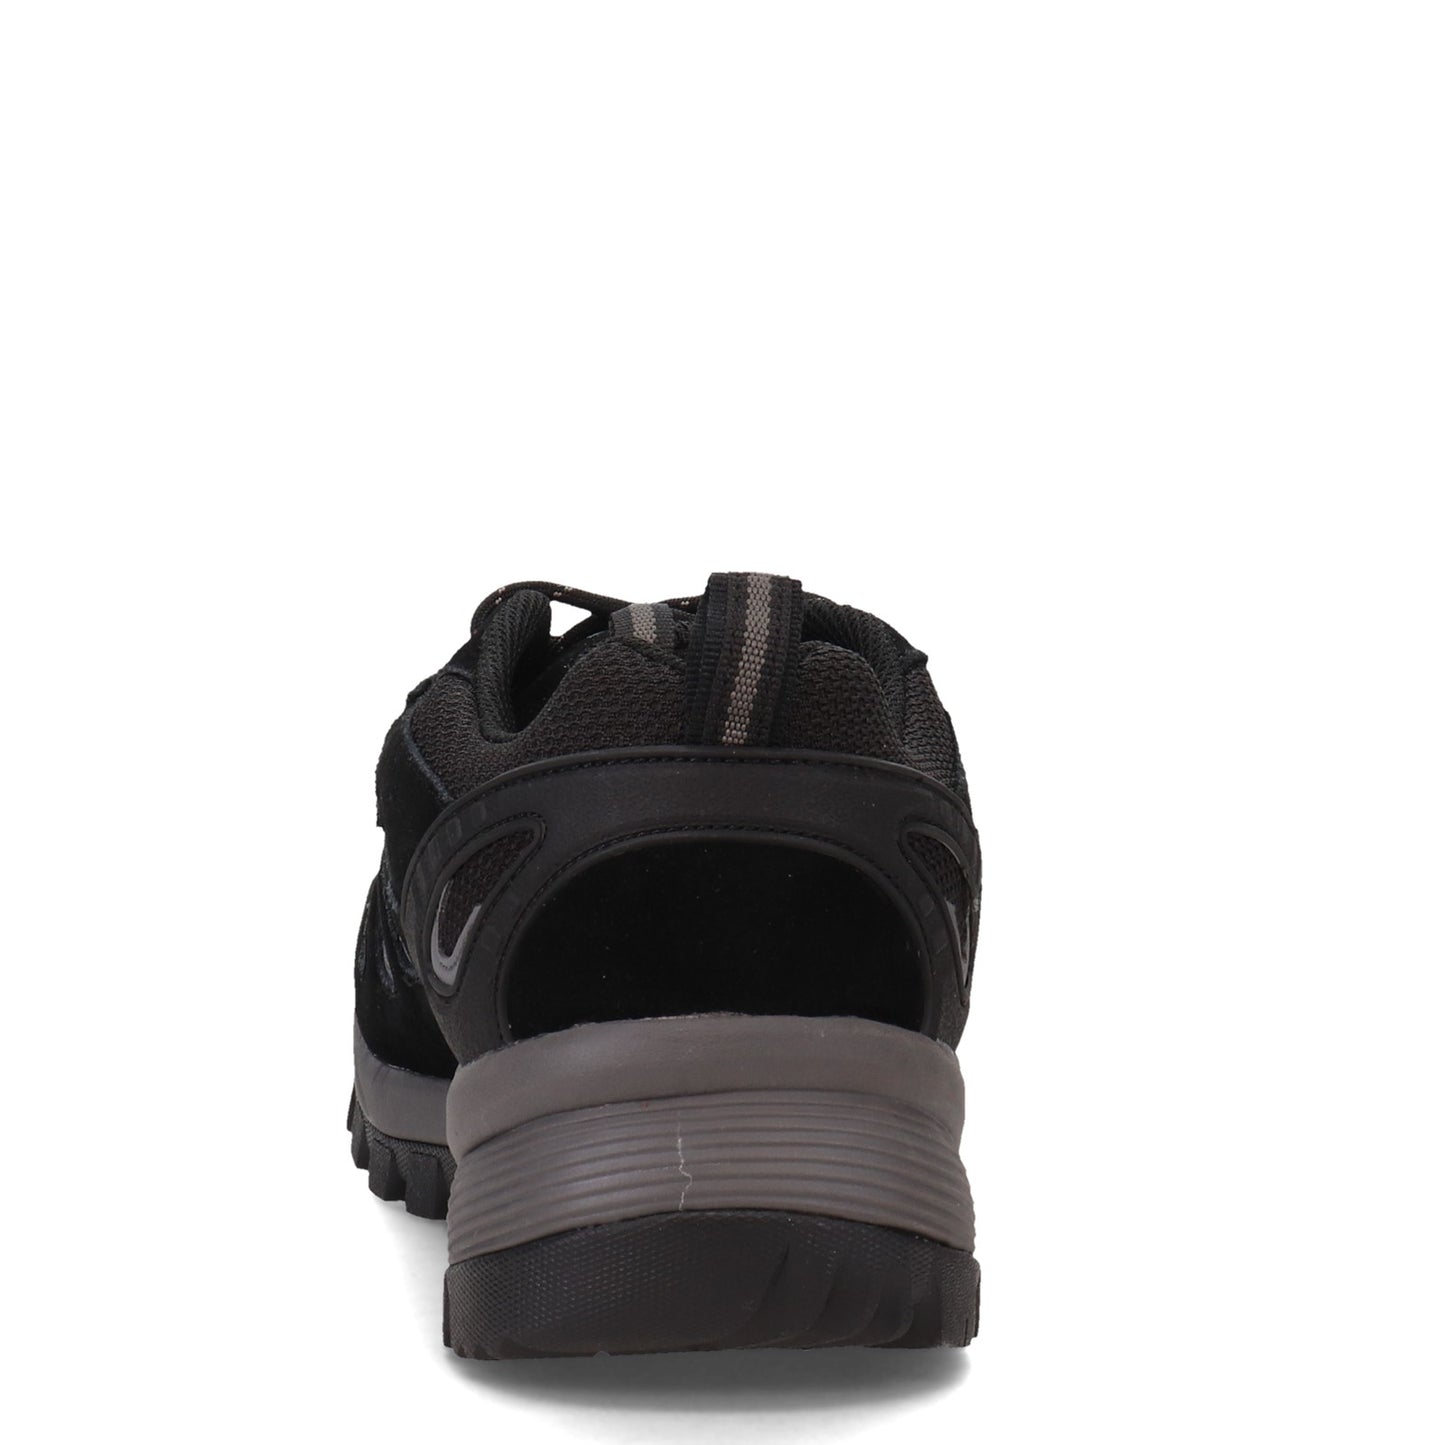 Peltz Shoes  Men's Propet Ridgewalker Low Hiking Shoe BLACK M3598-B